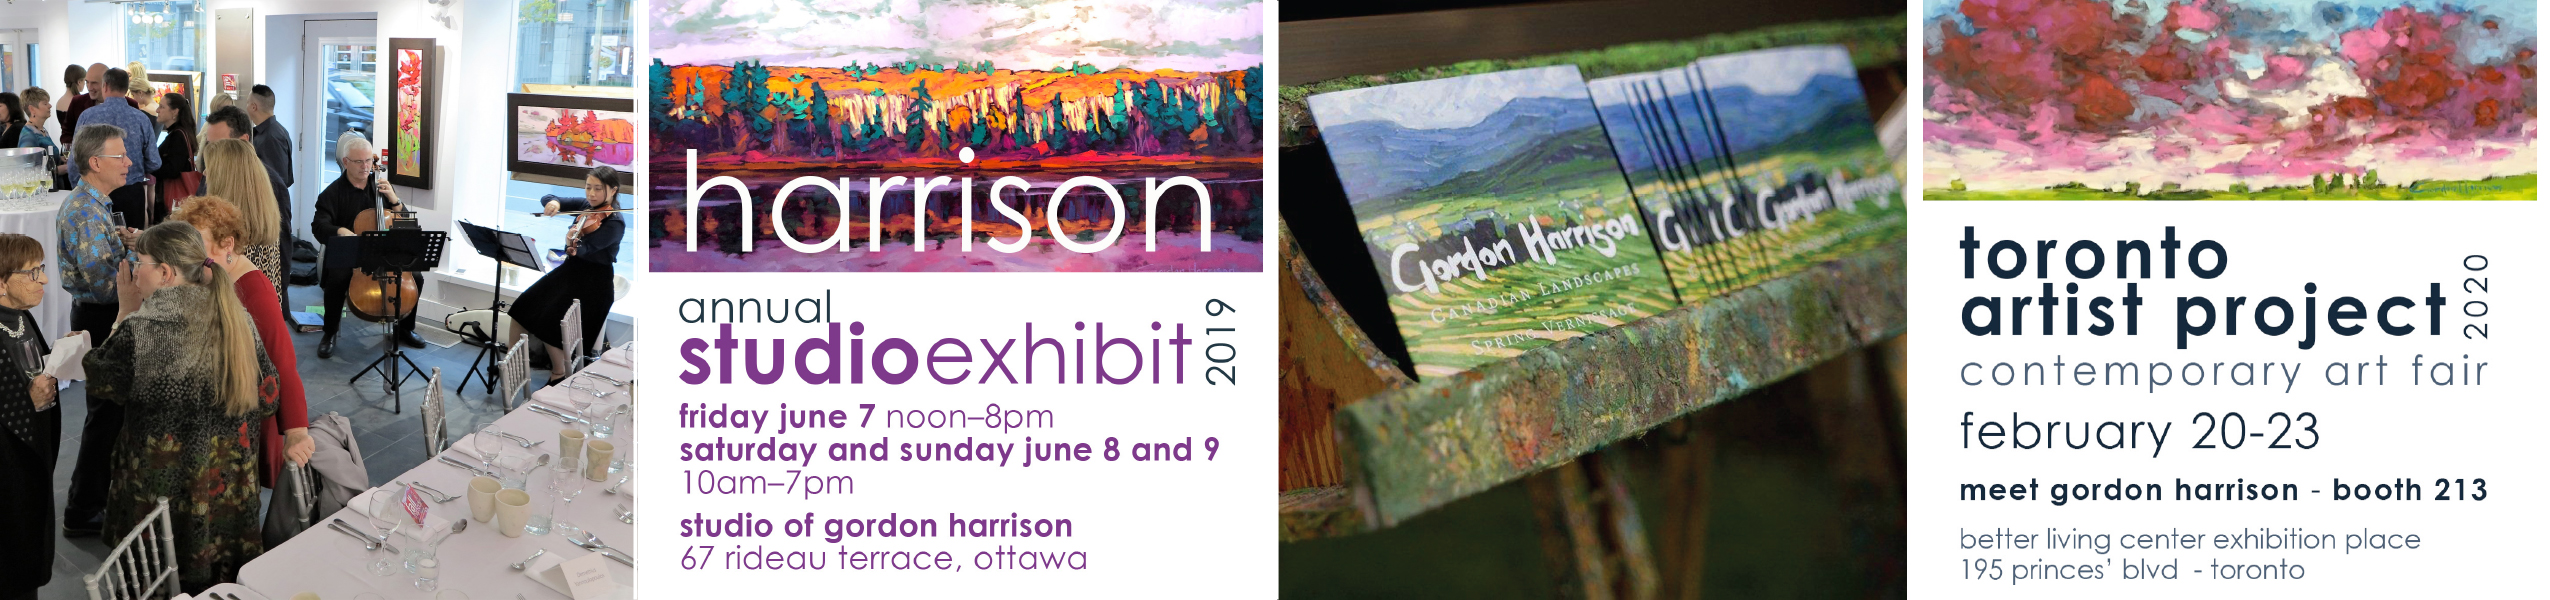 exhibit-photostrip - gordon harrison canadian landscape gallery ...